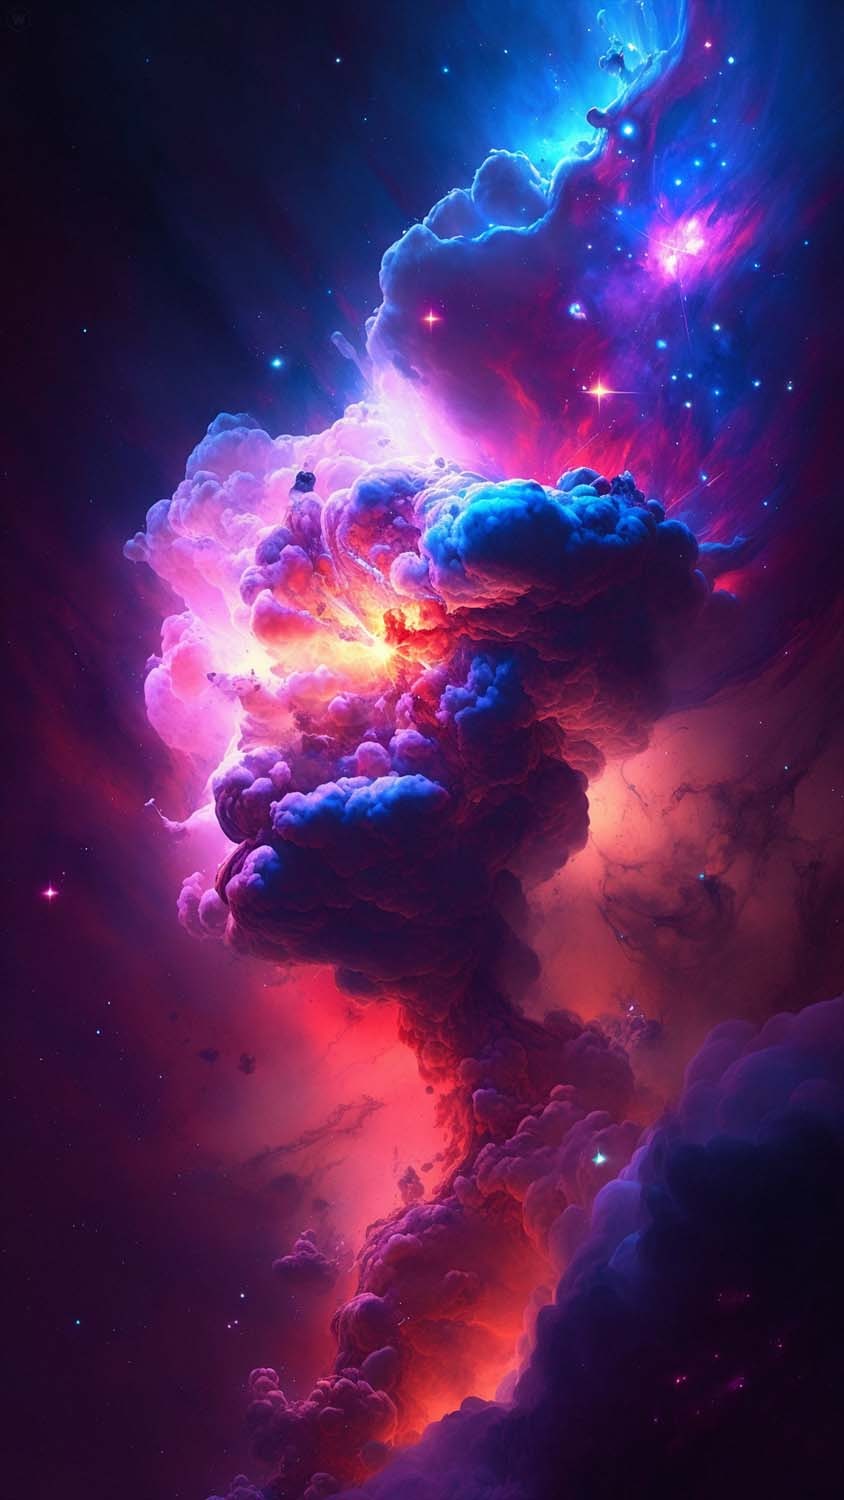 Nebula Clouds iPhone Wallpaper HD